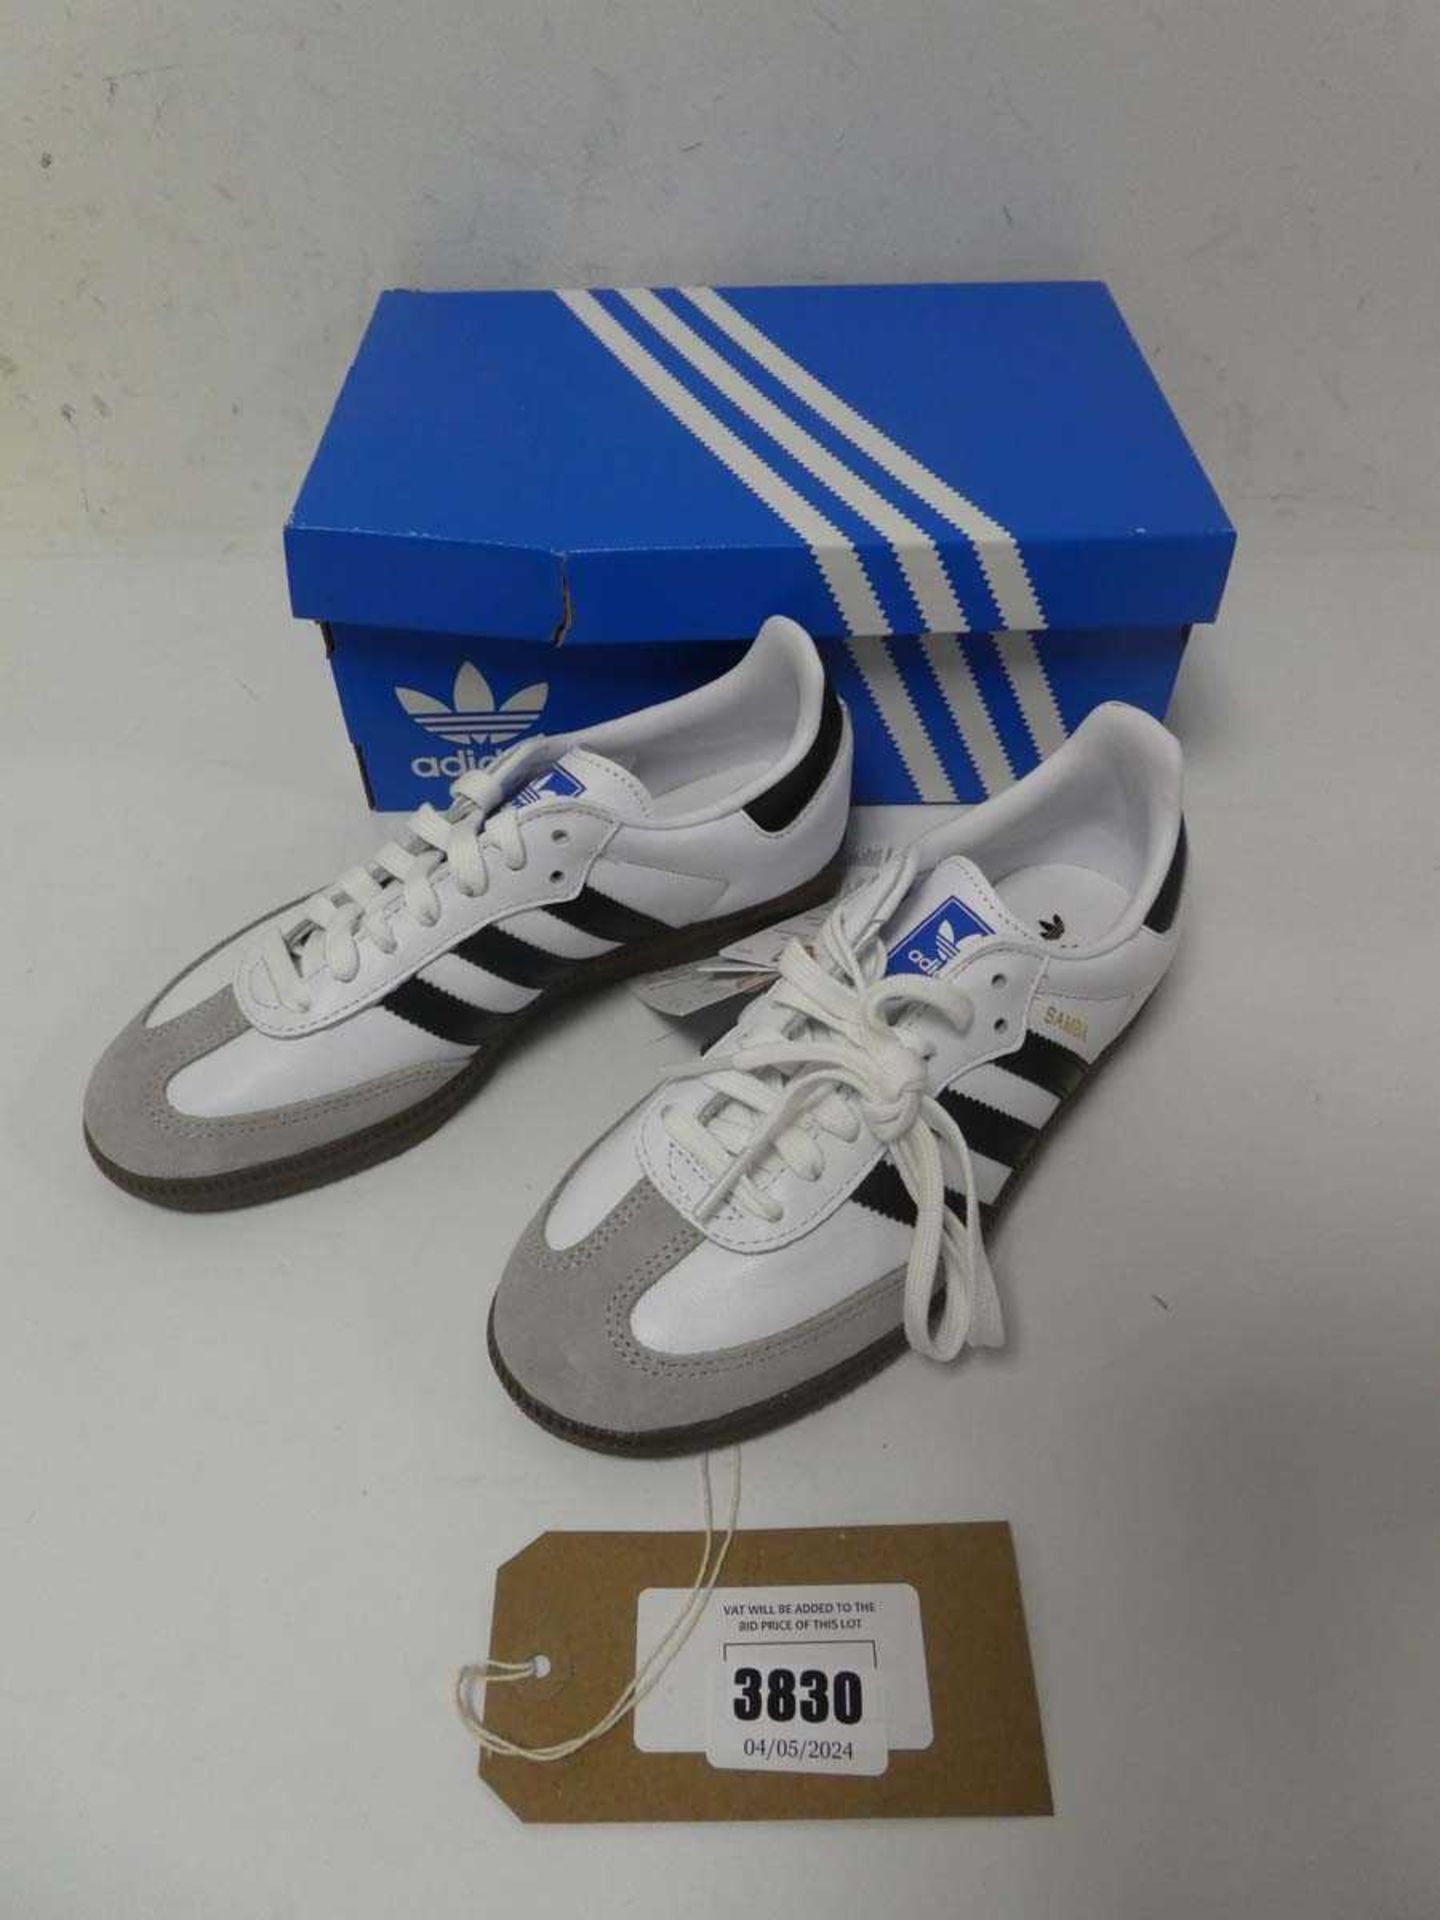 +VAT 1 x men's Adidas Samba OG trainers, UK 5